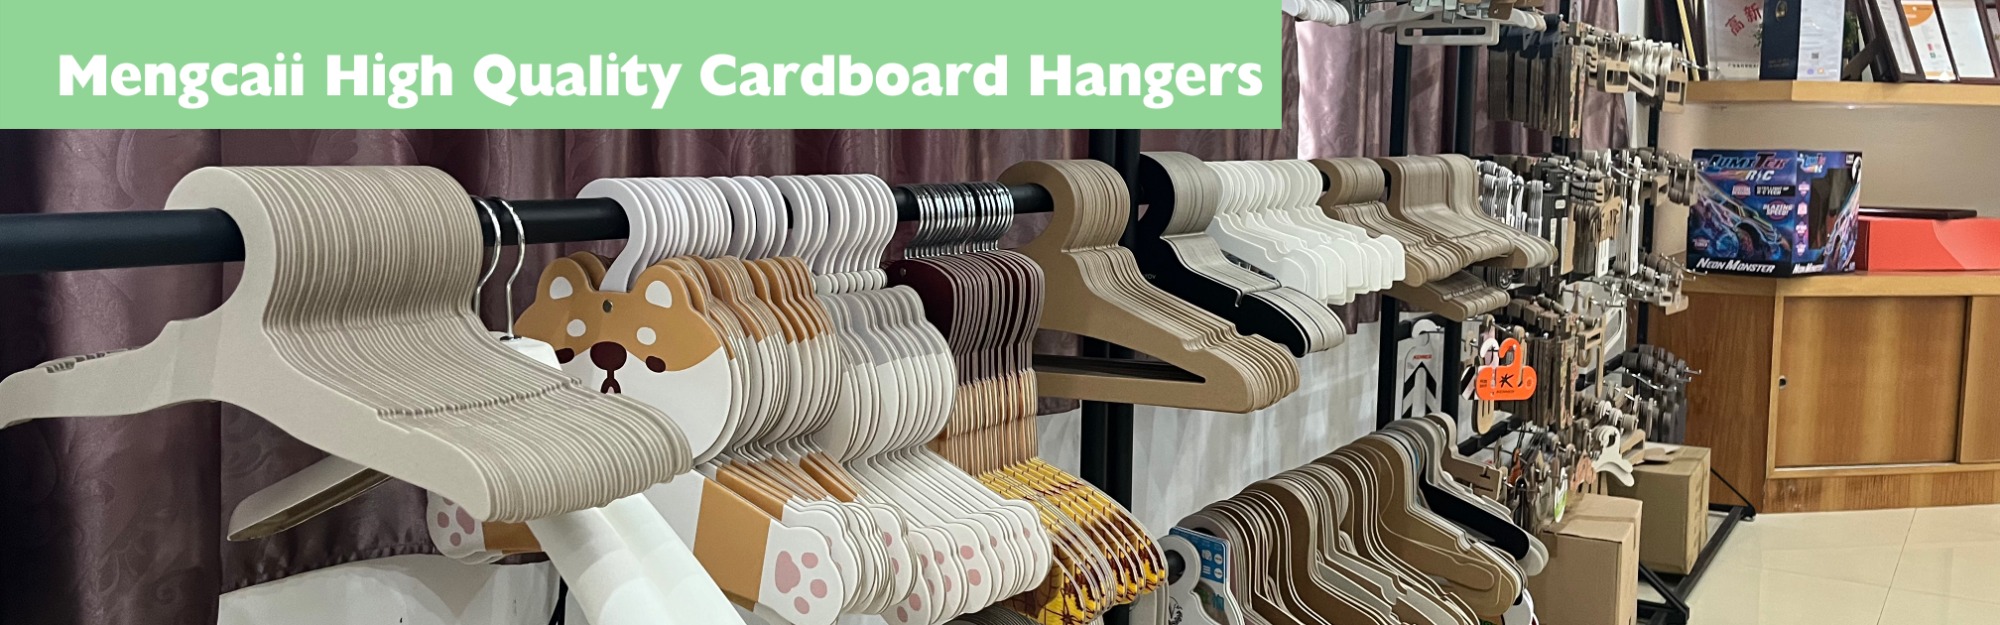 Mengcaii High Quality Cardboard Hangers